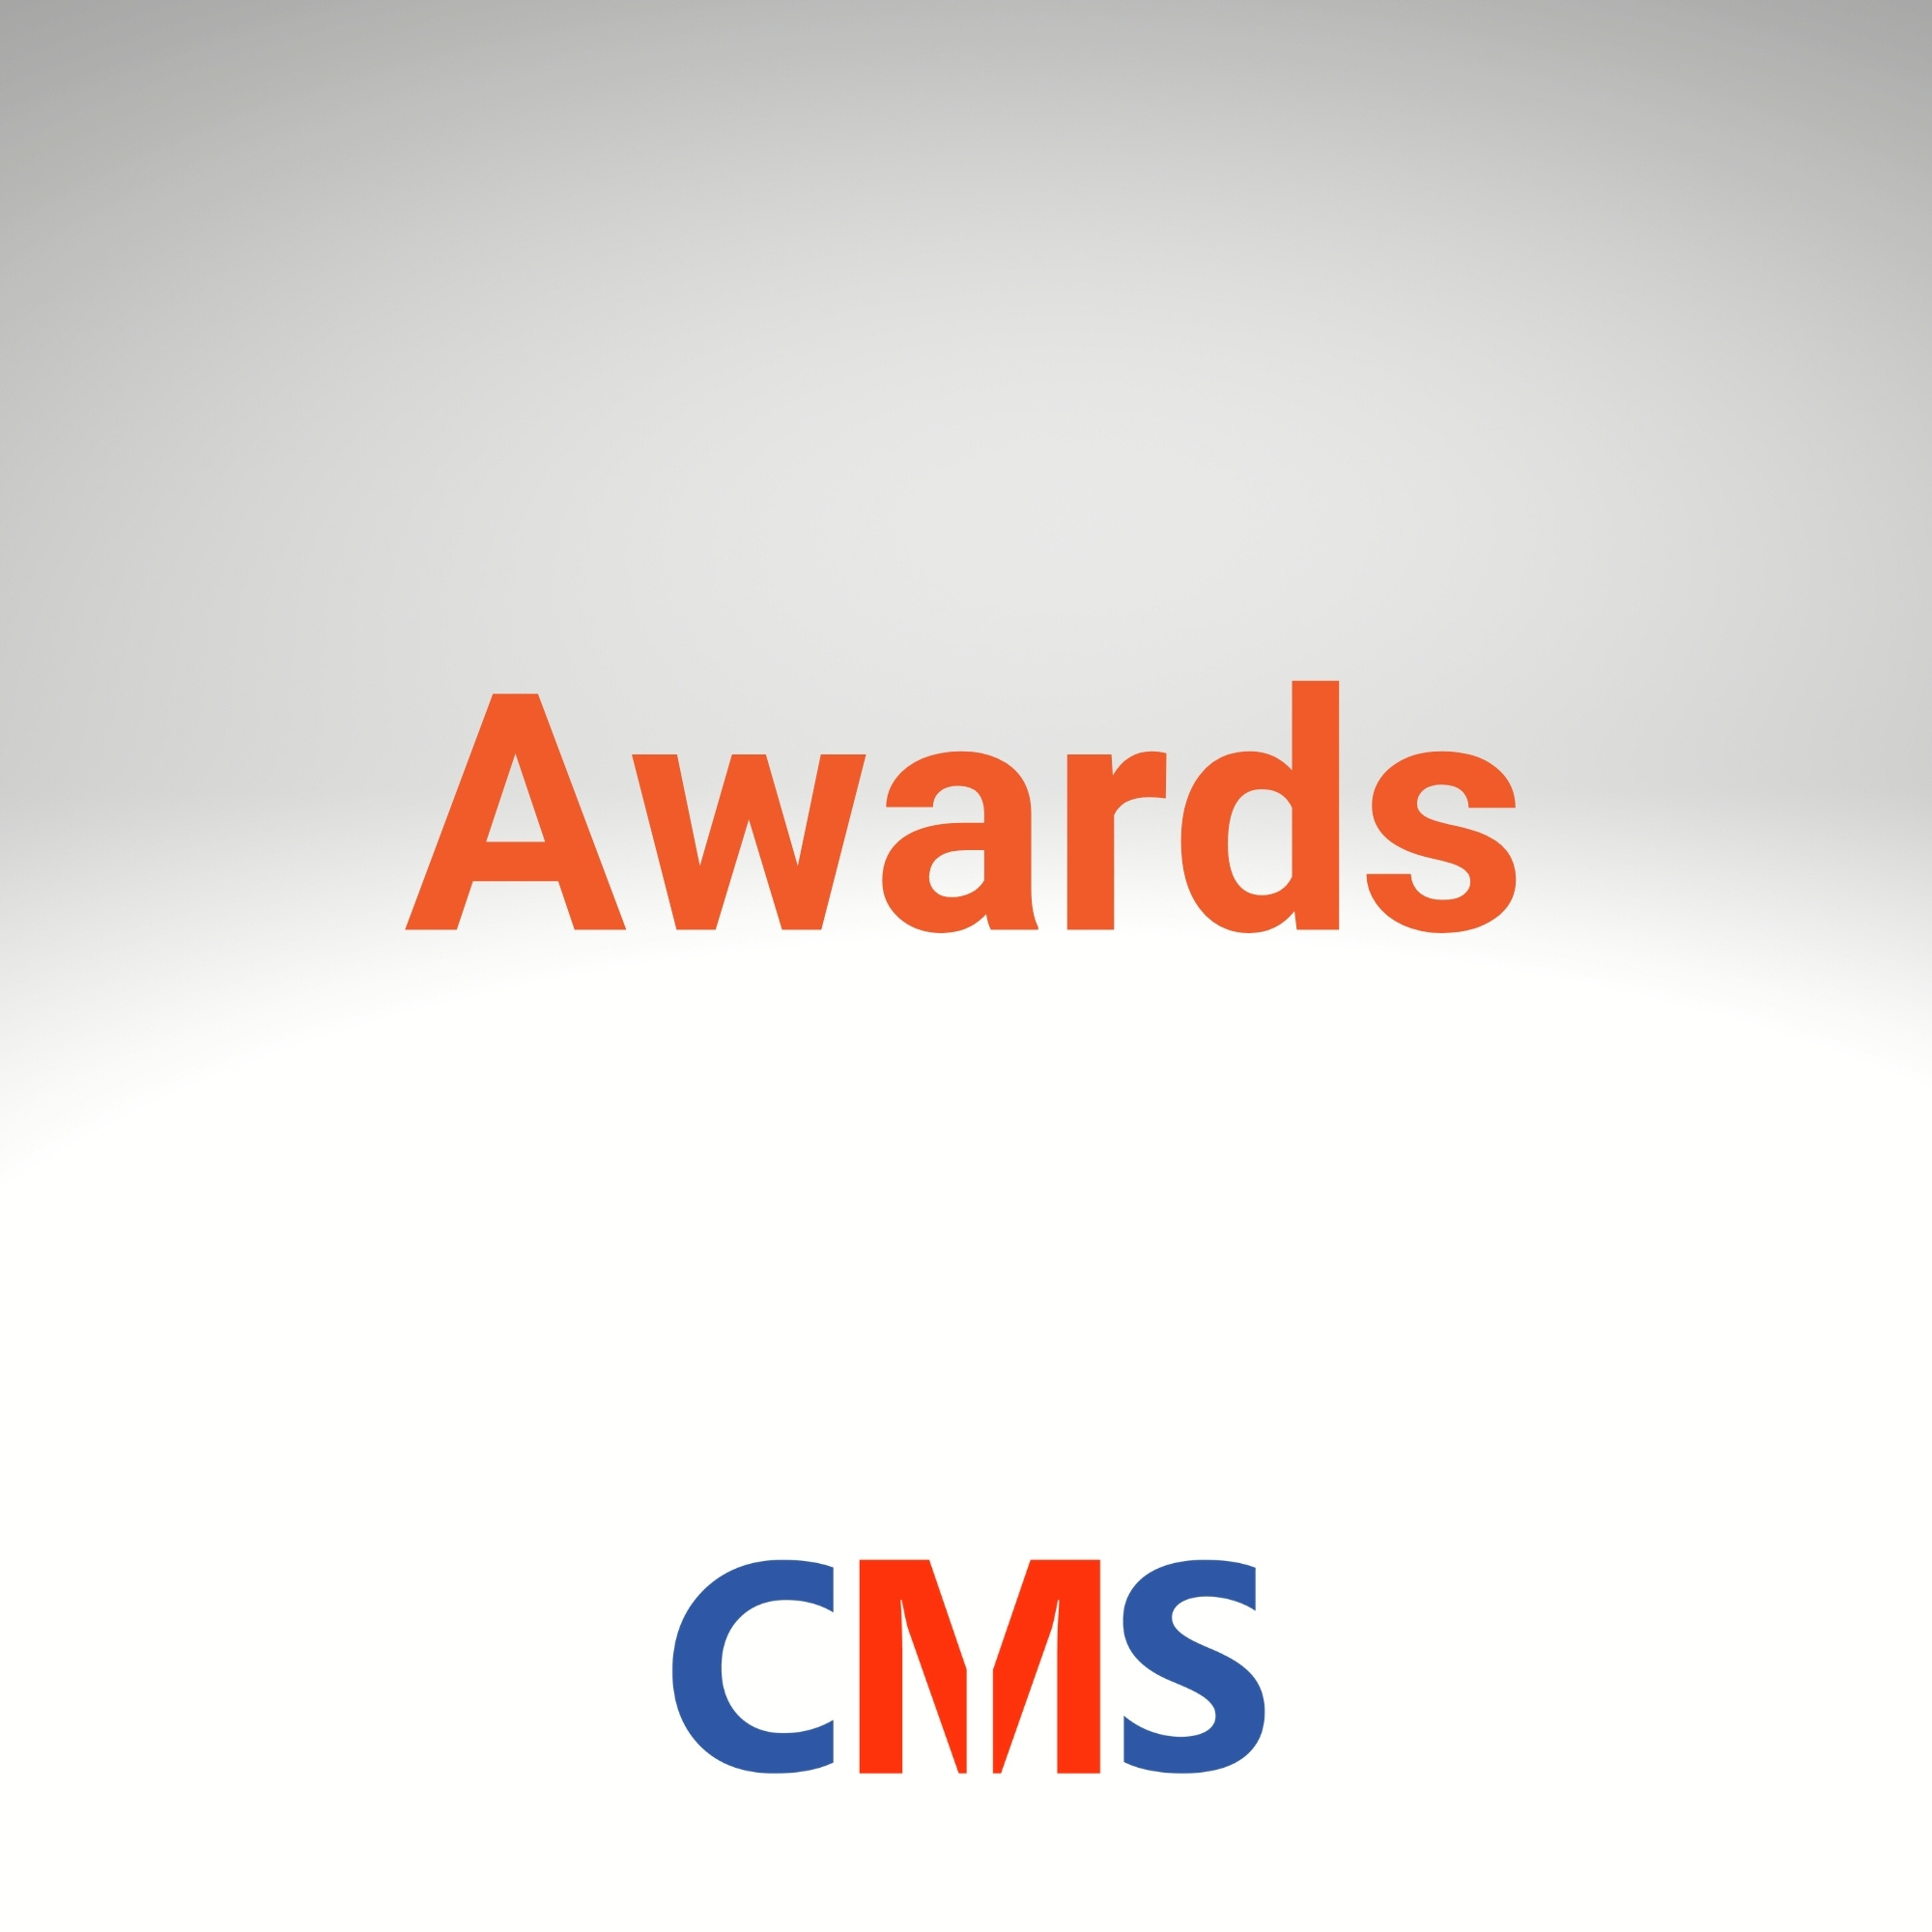 Awards CMS Corporation